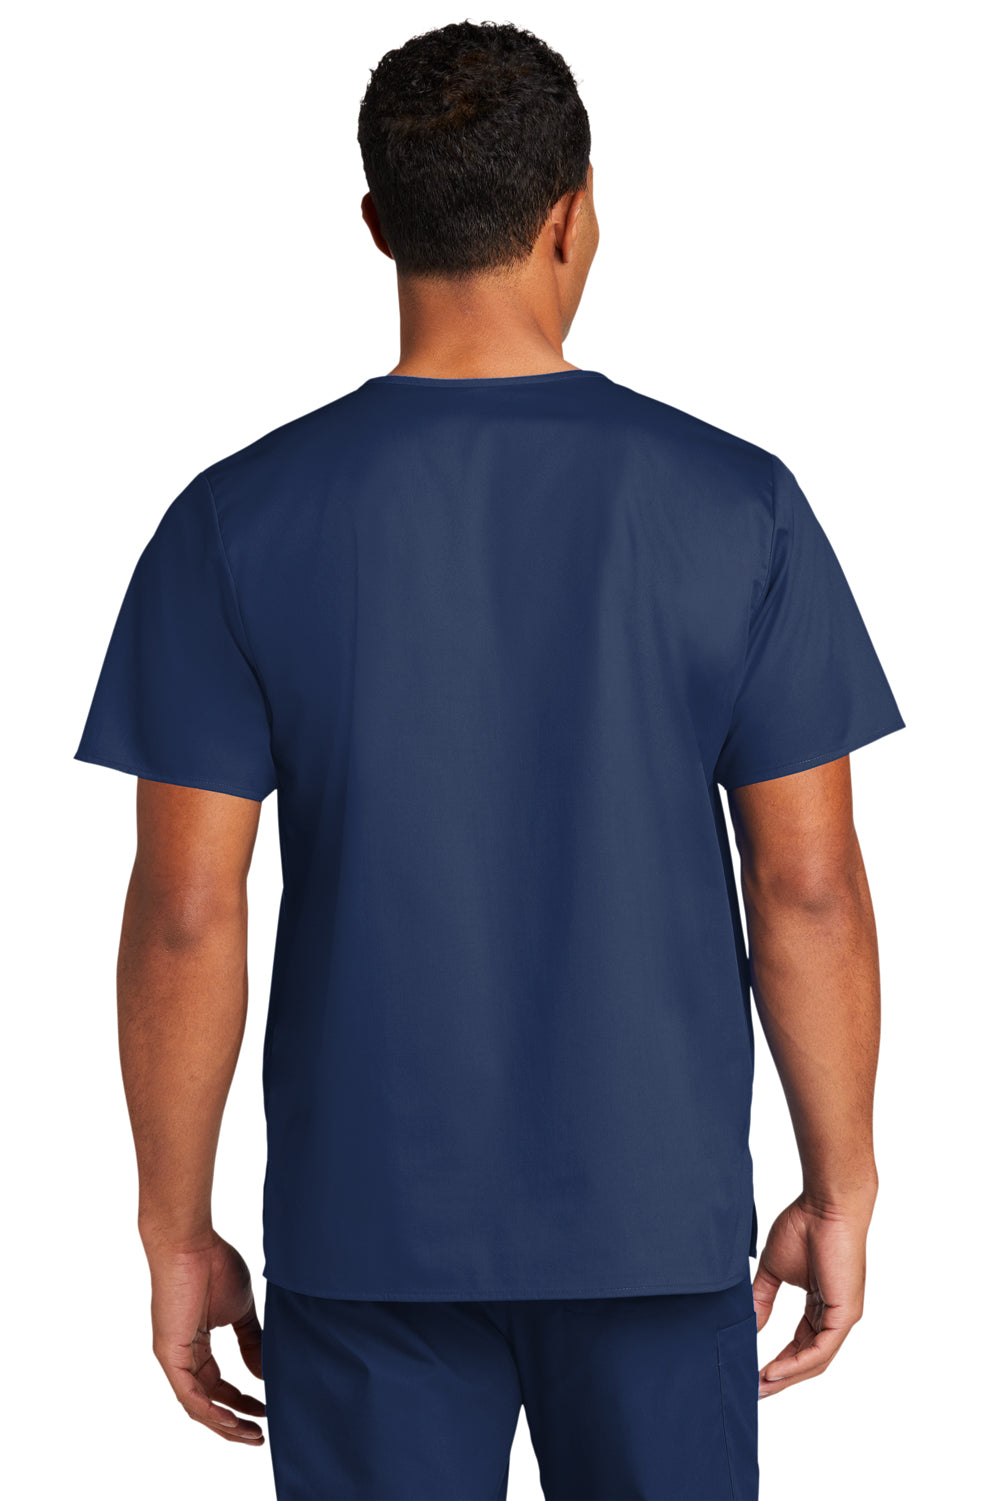 Wonderwink WW3160 WorkFlex Short Sleeve V-Neck Shirt w/ Pocket Navy Blue Back